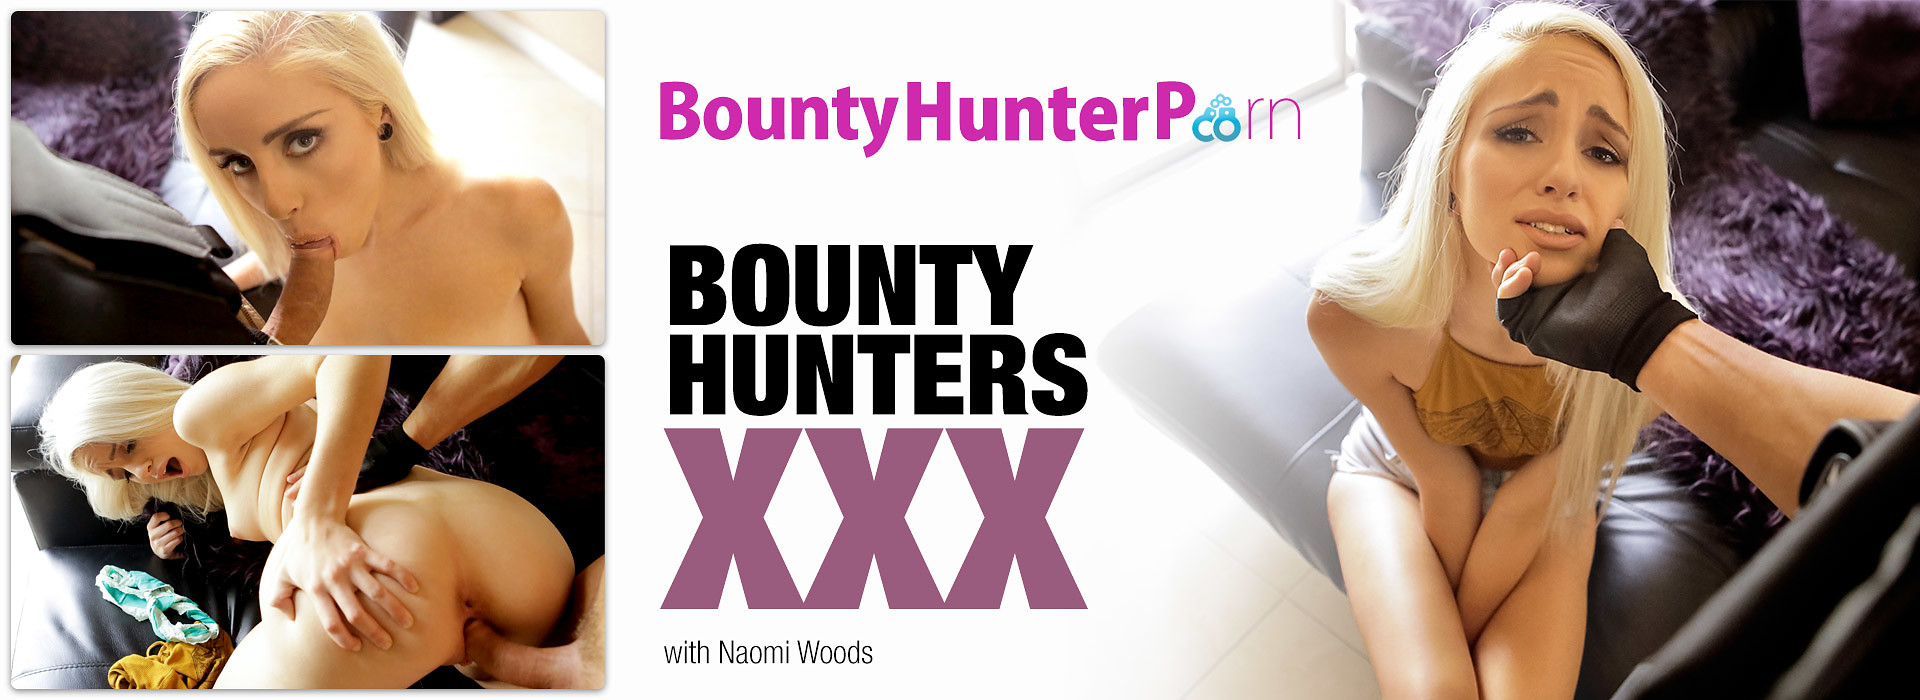 Bounty hunters porn